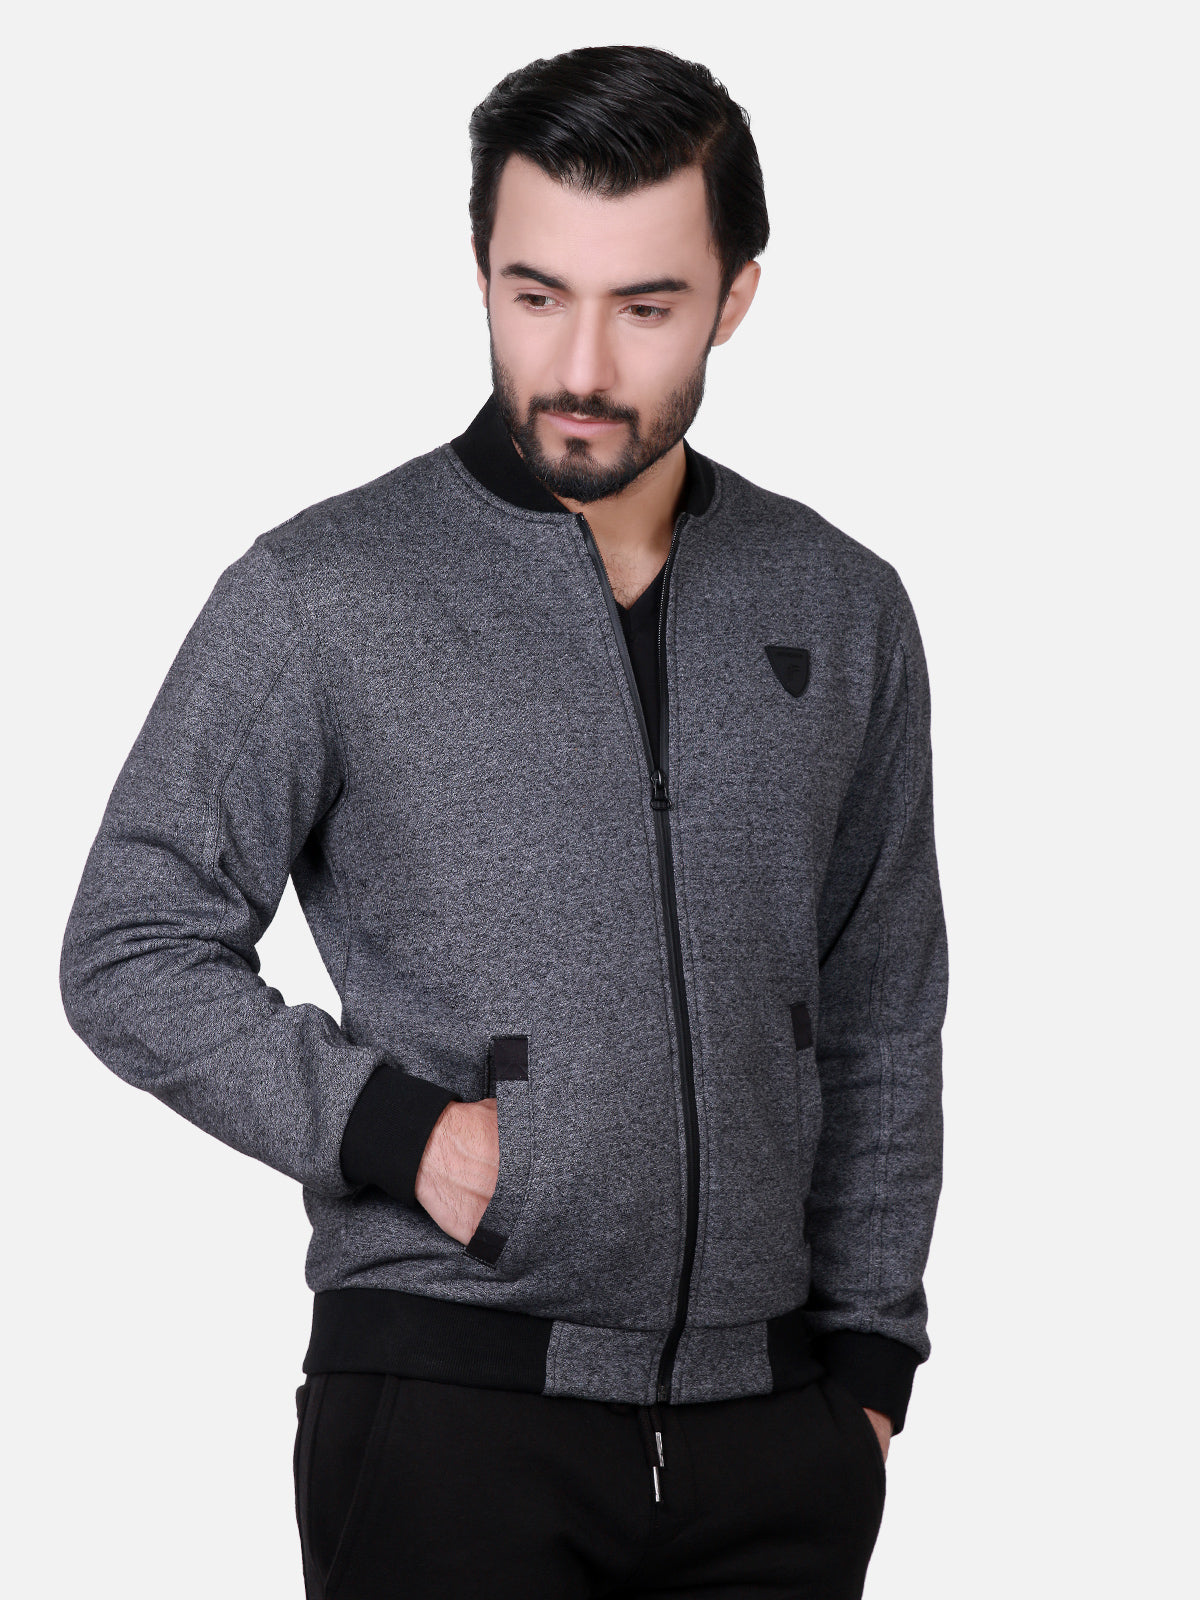 Men's Grey Sweater - FMTSWT17-17213